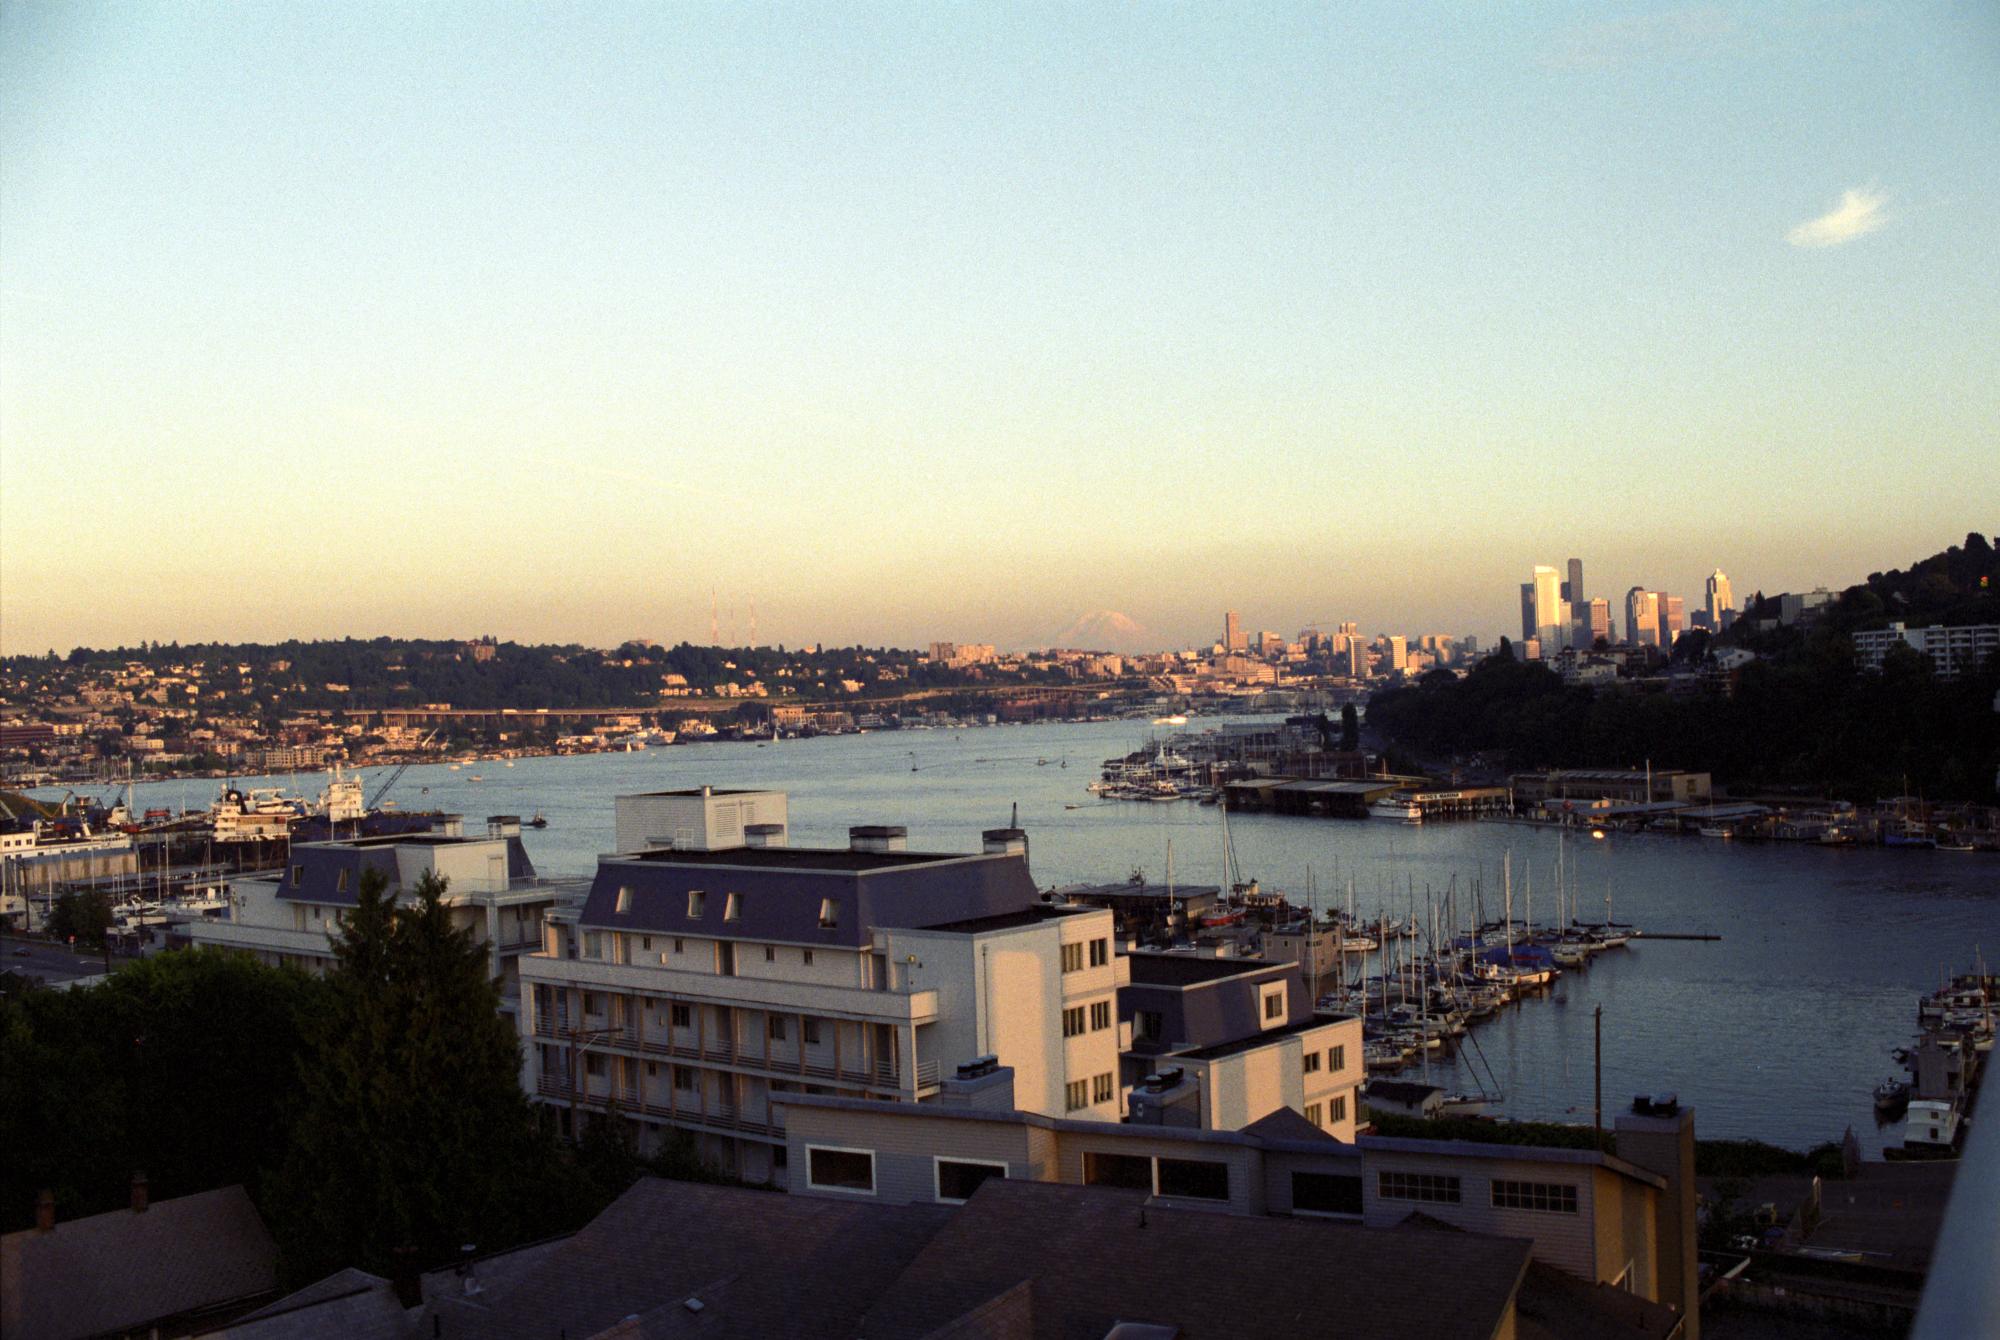 Seattle (1993) - Lake Union